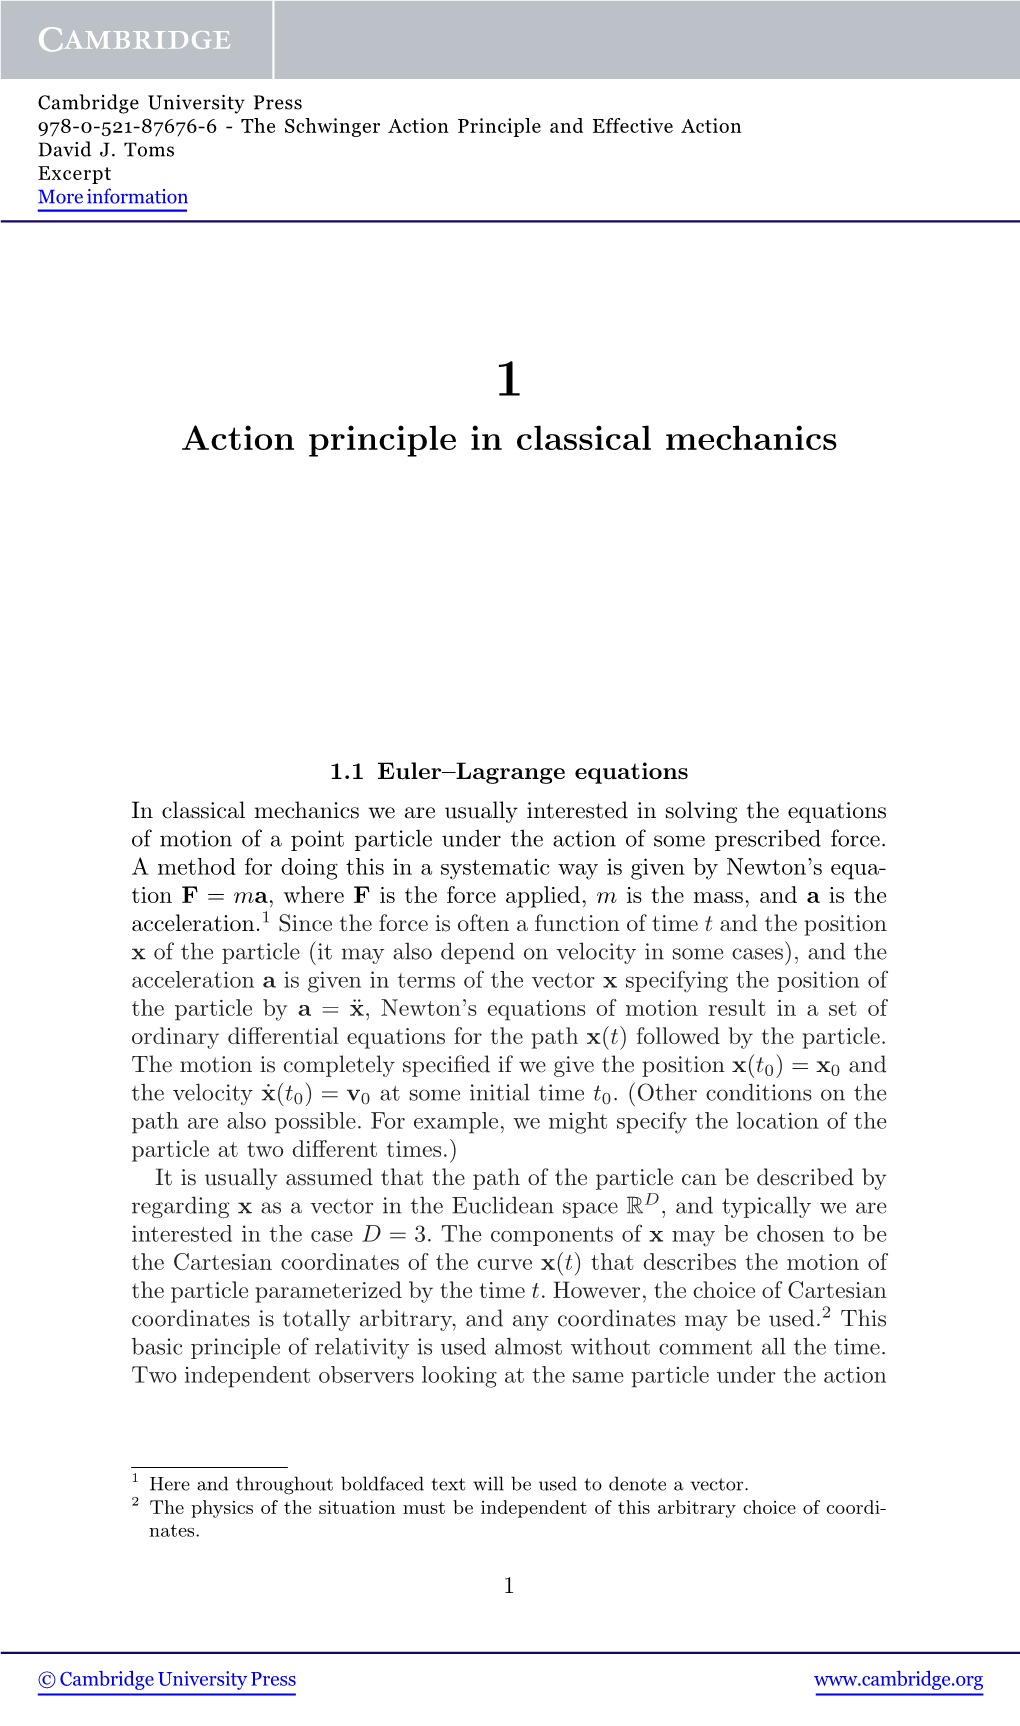 Action Principle in Classical Mechanics